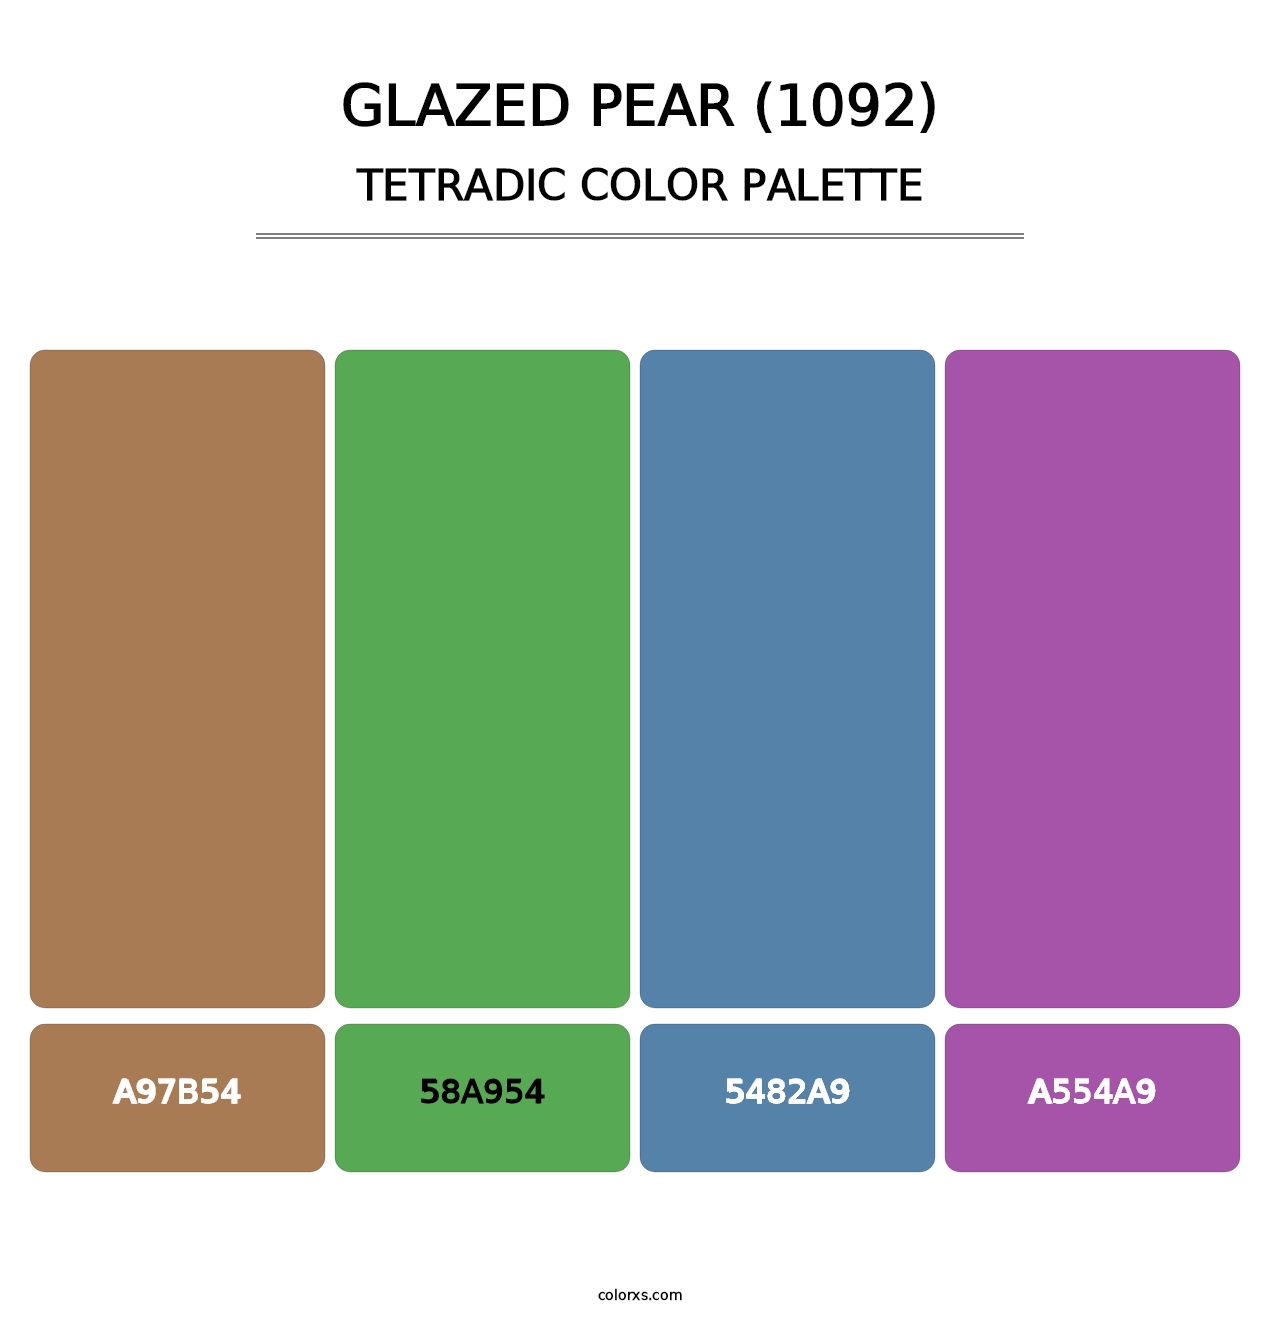 Glazed Pear (1092) - Tetradic Color Palette